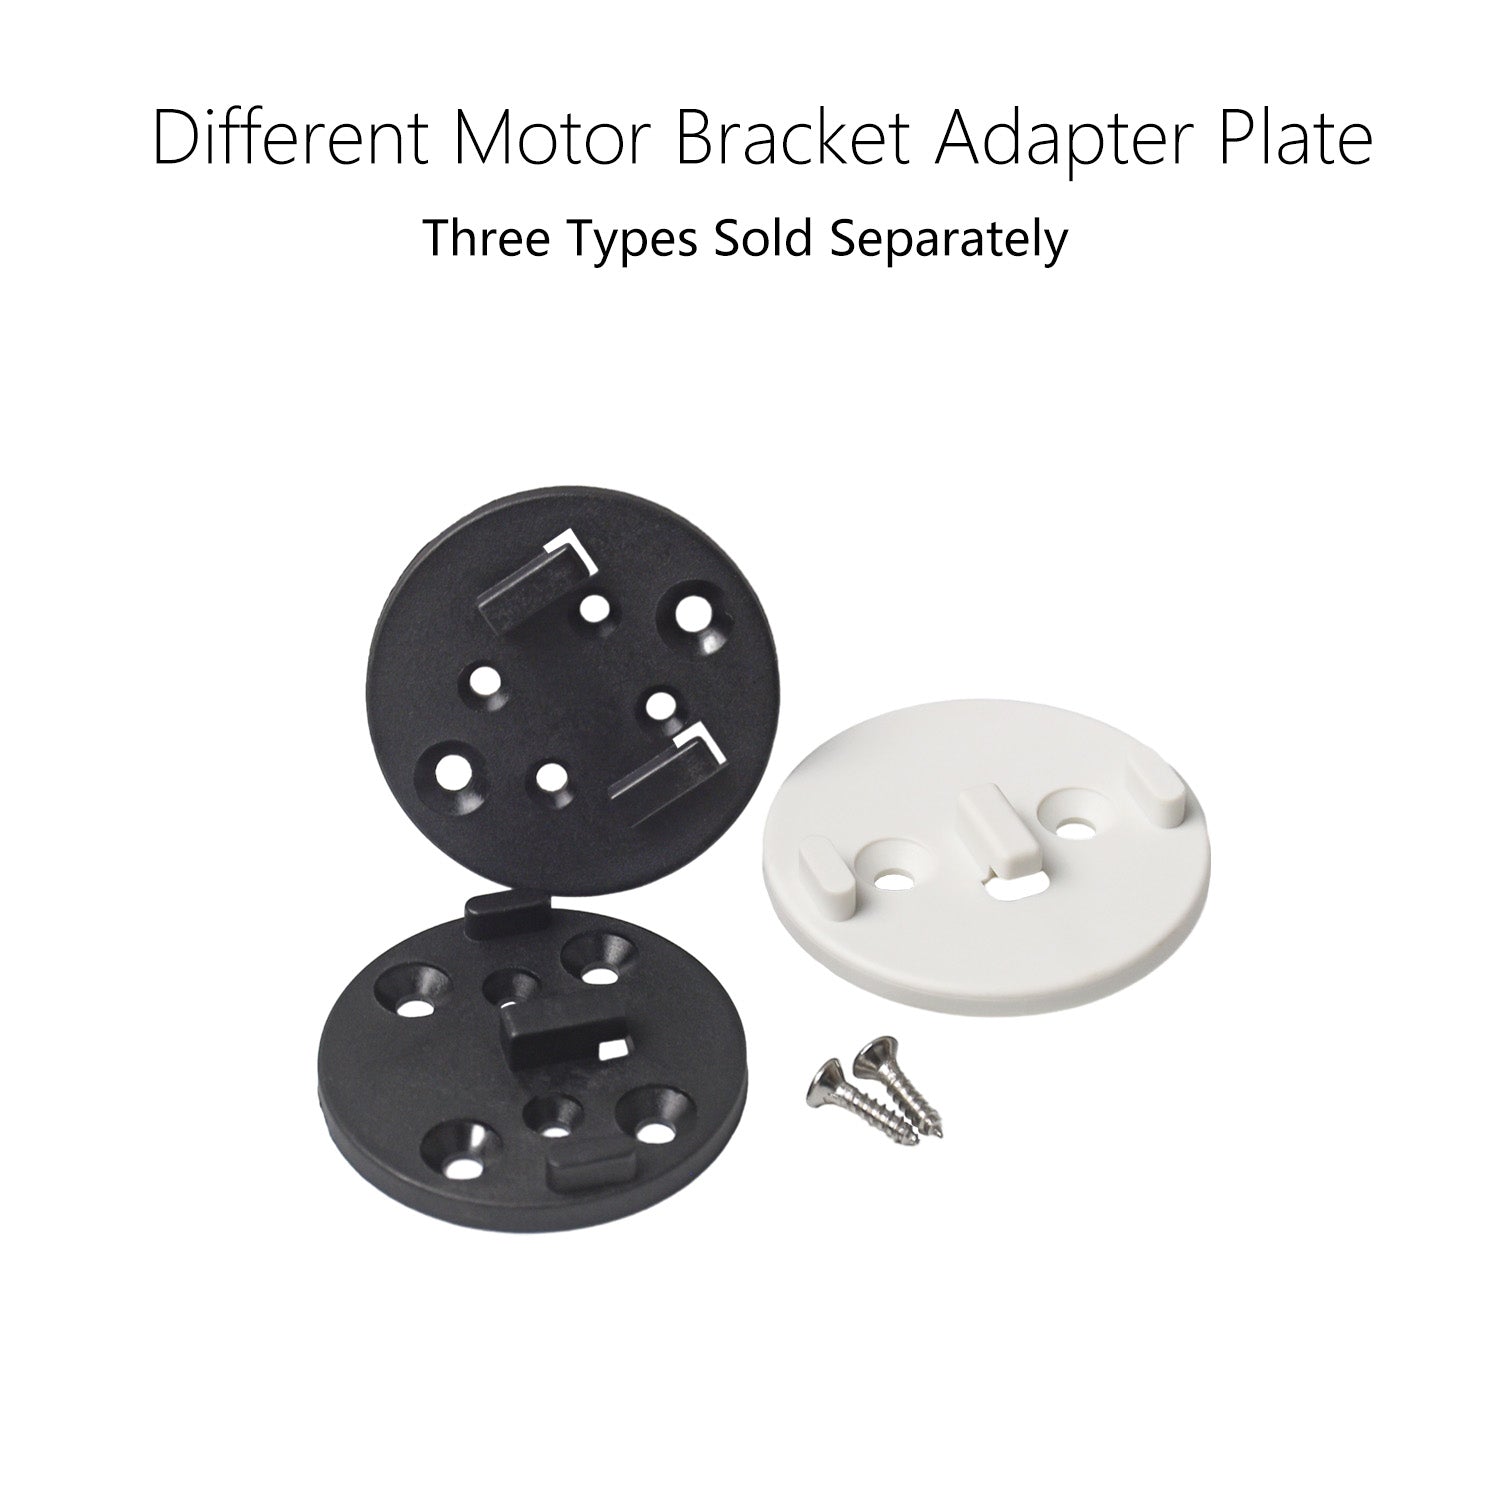 Roller Blind Bracket Adapter Plate, Mounting Plates for Electric Blind Motor.